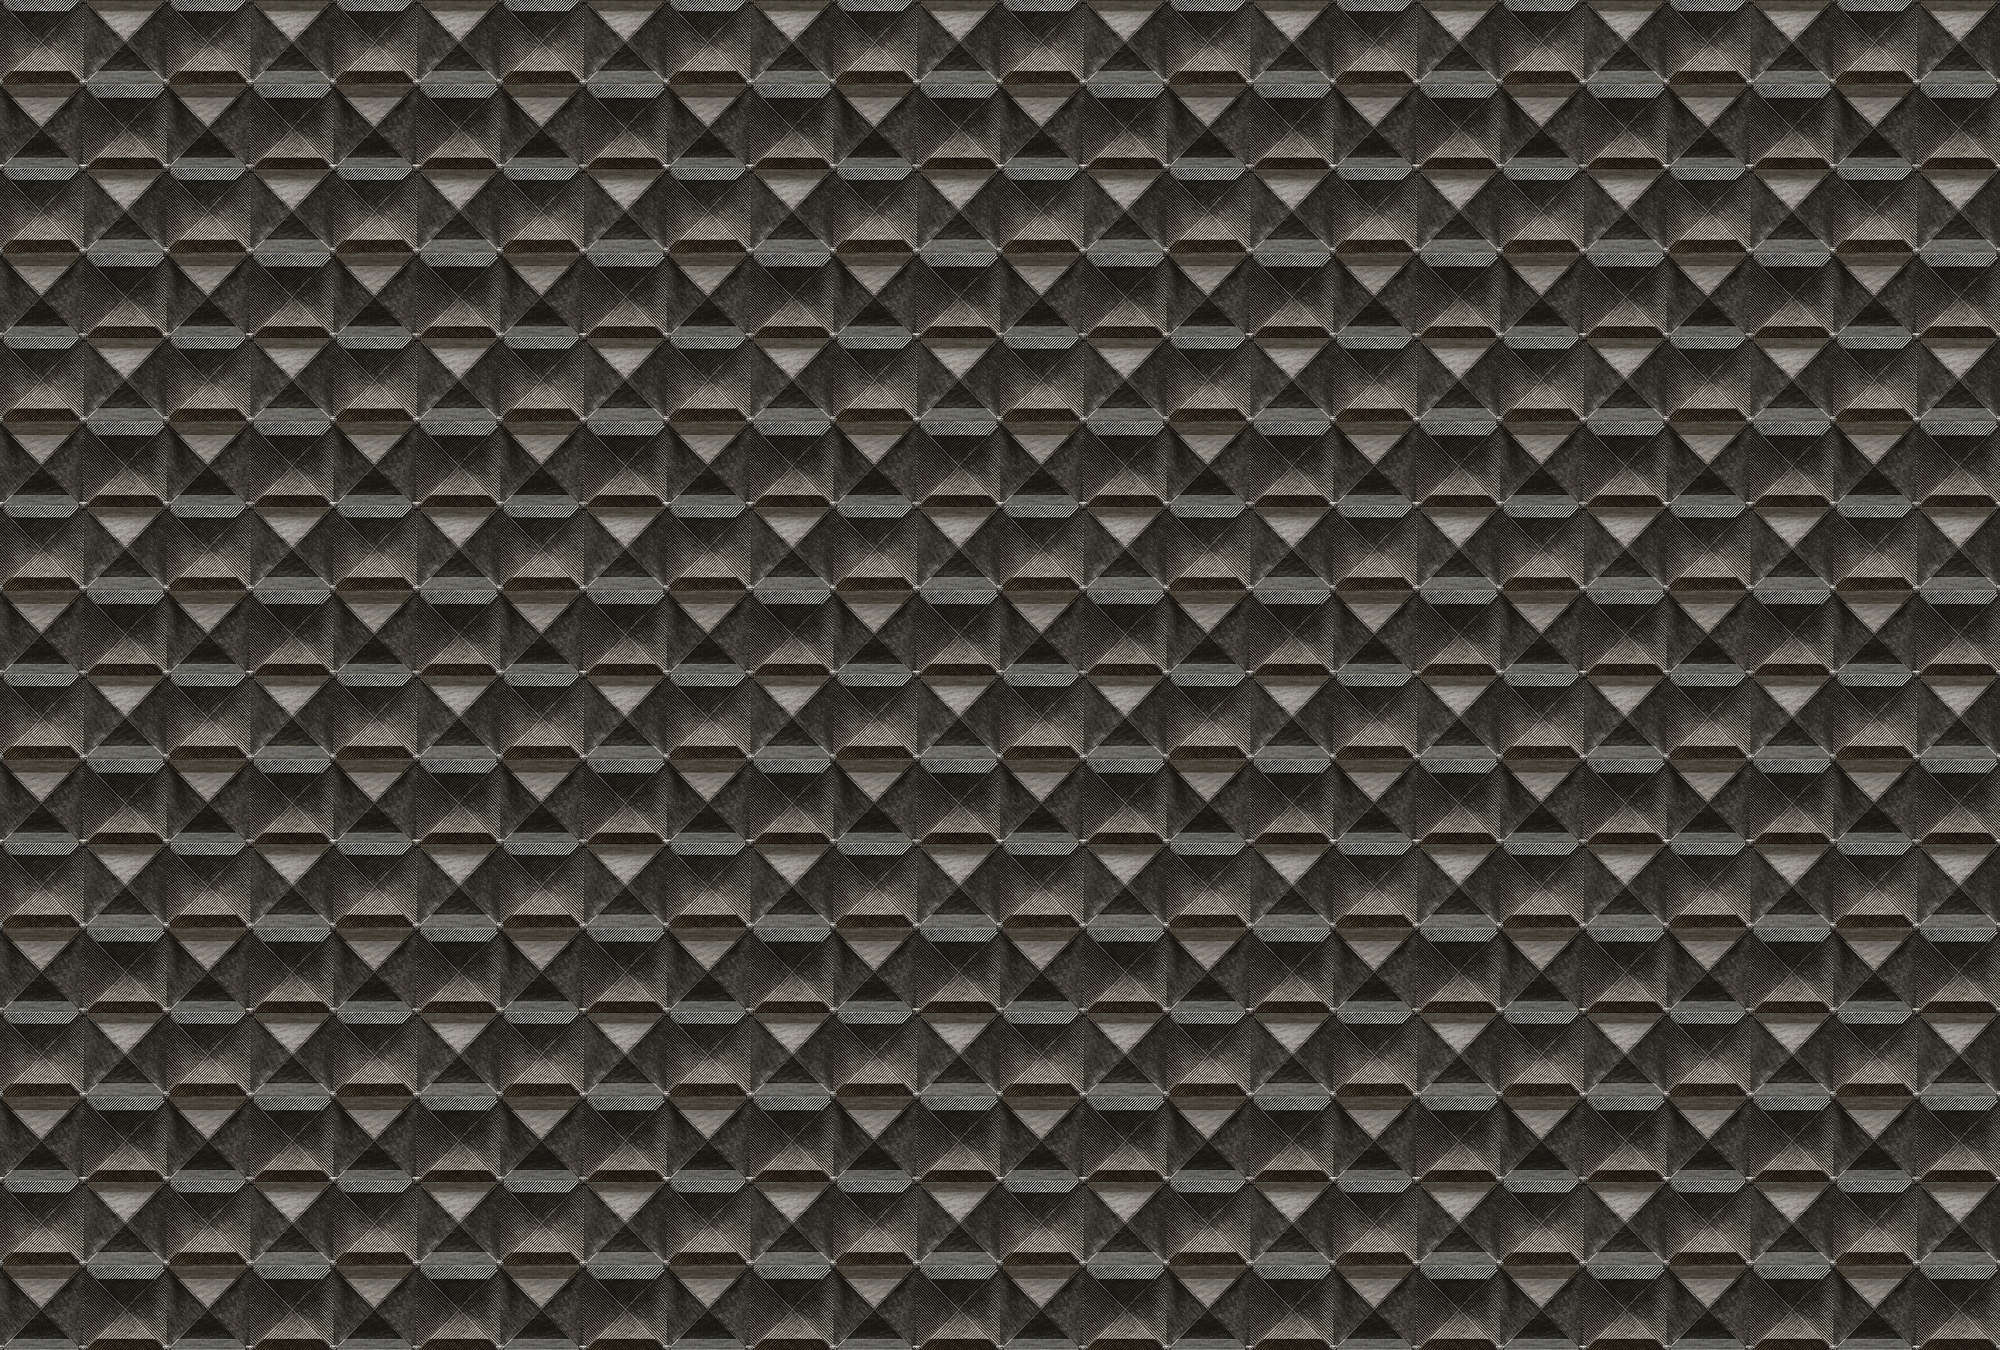             The edge 1 - 3D wallpaper with lozenge metal design - brown, black | pearlescent smooth fleece
        